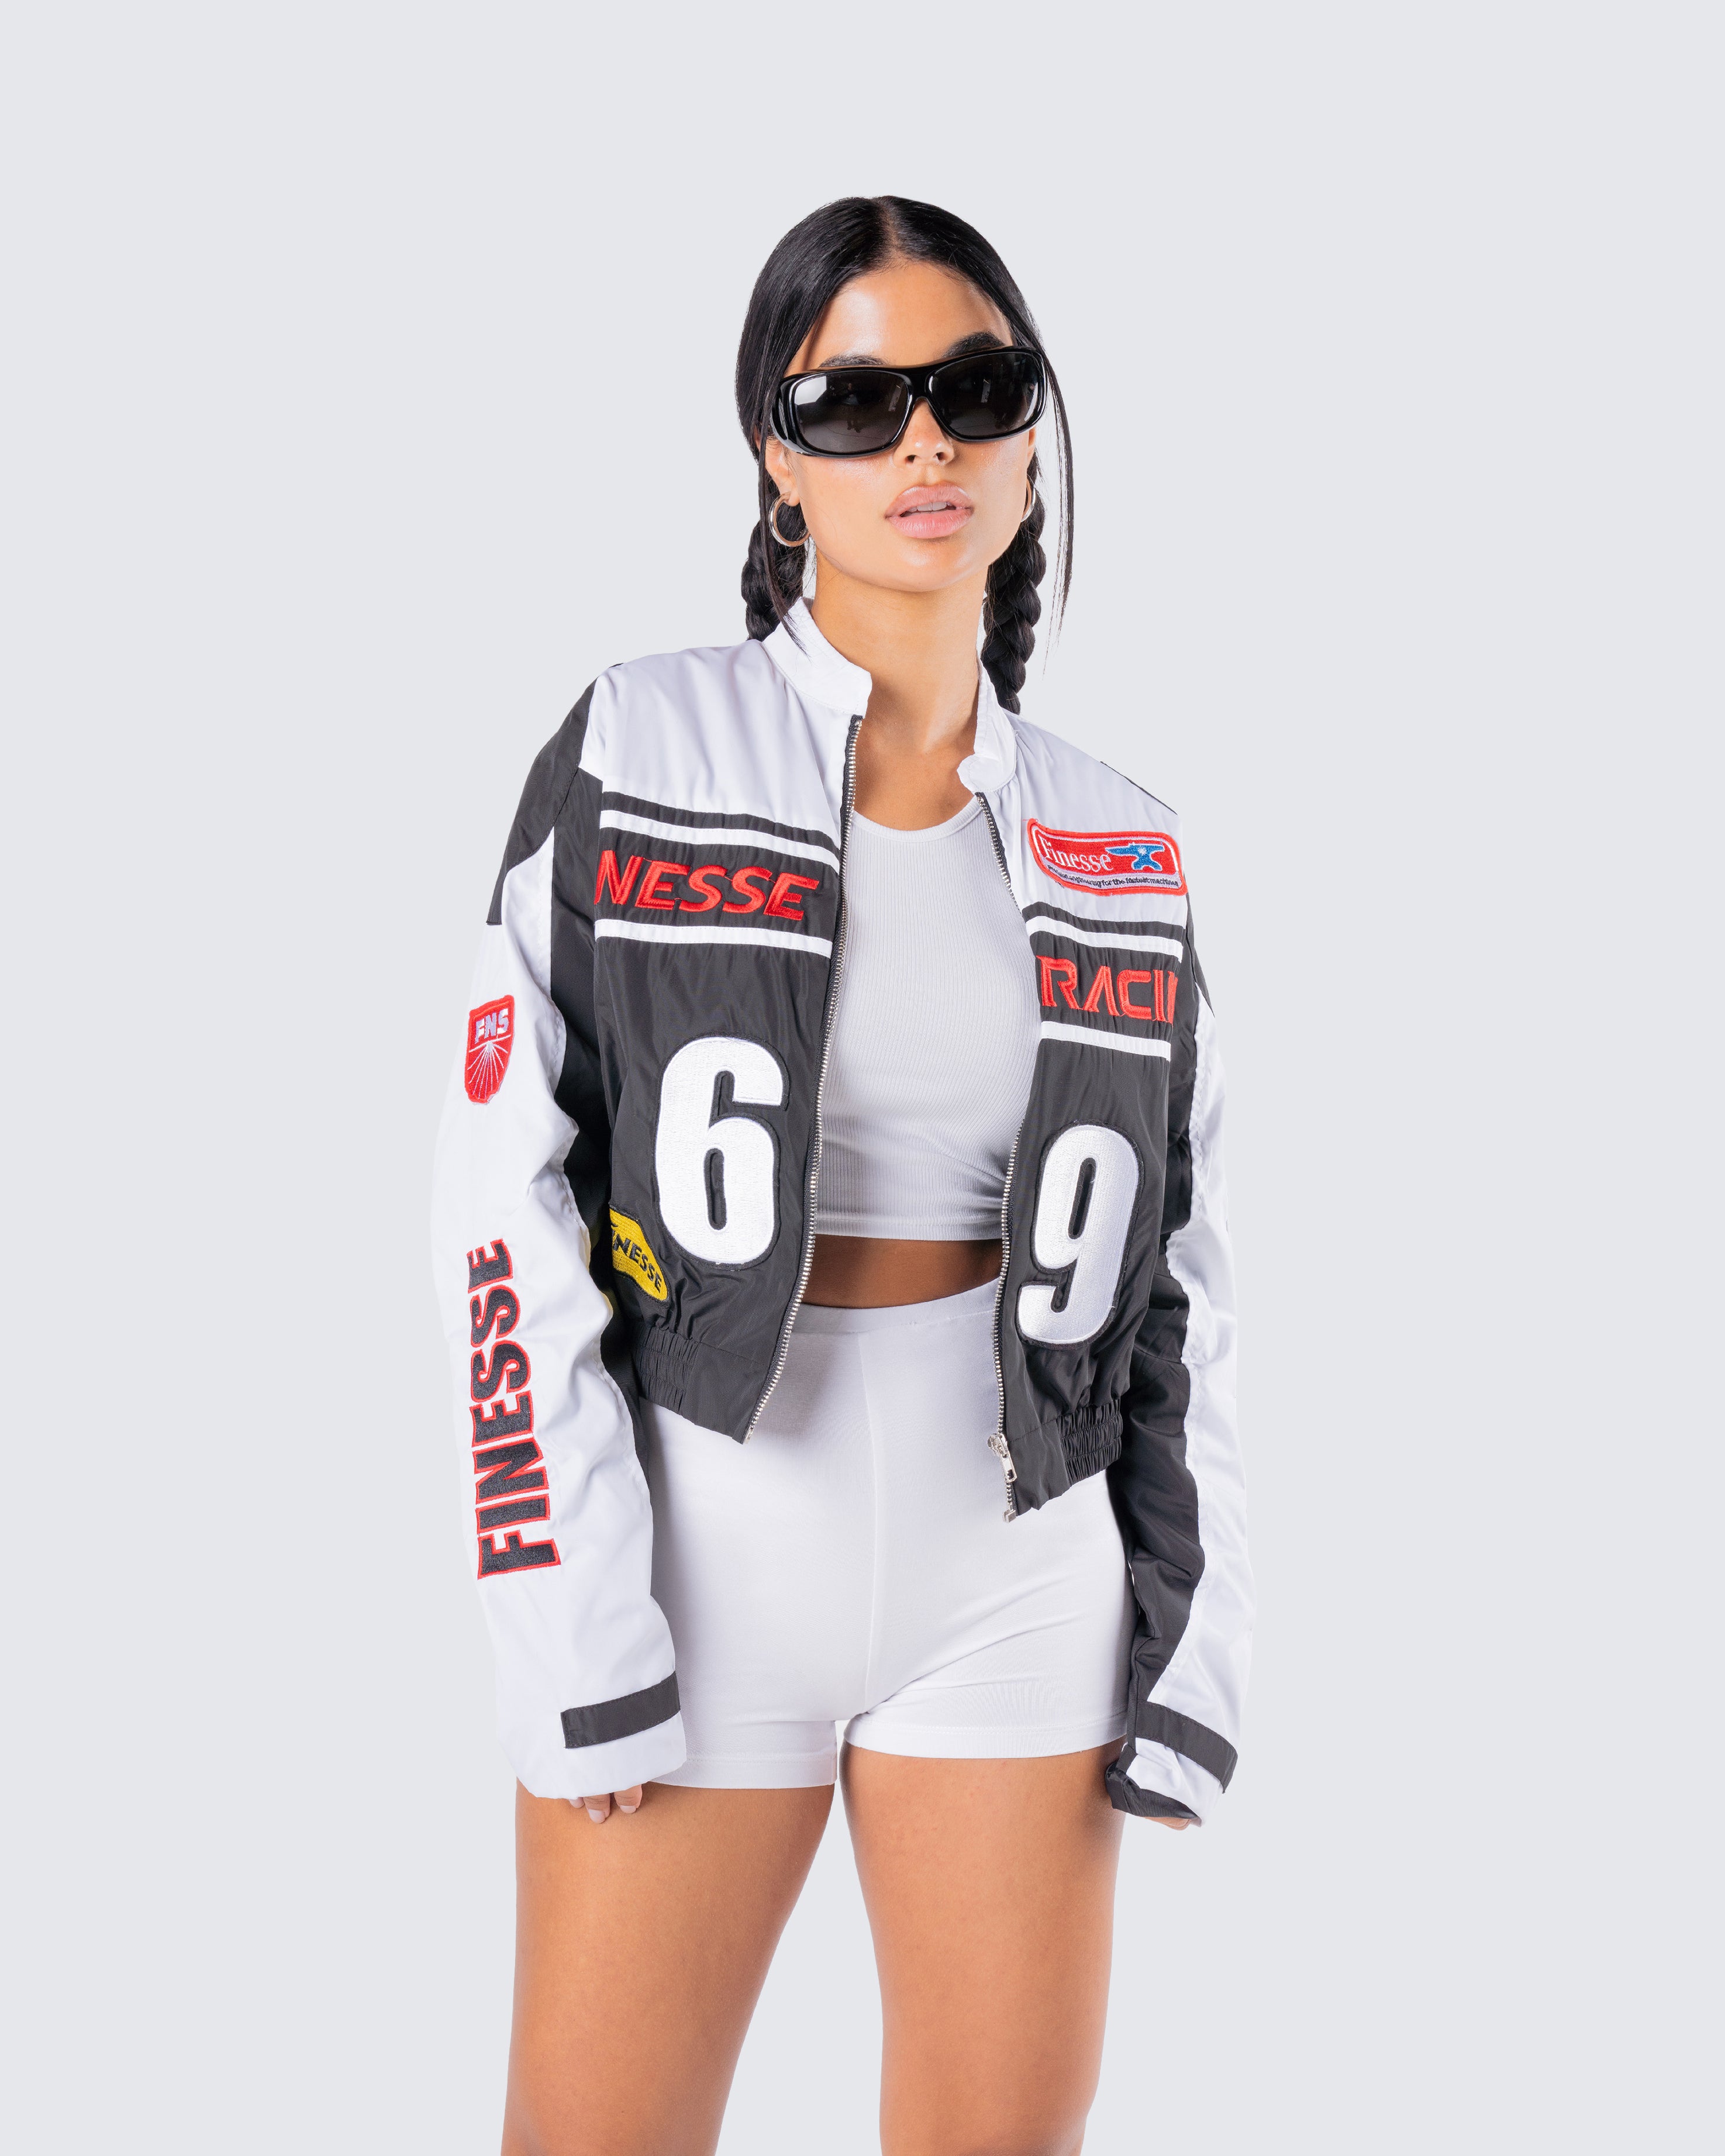 Racing Vintage Rare Streetwear Ferrari Fashion/Bomber Jacket size M to XXL  | eBay